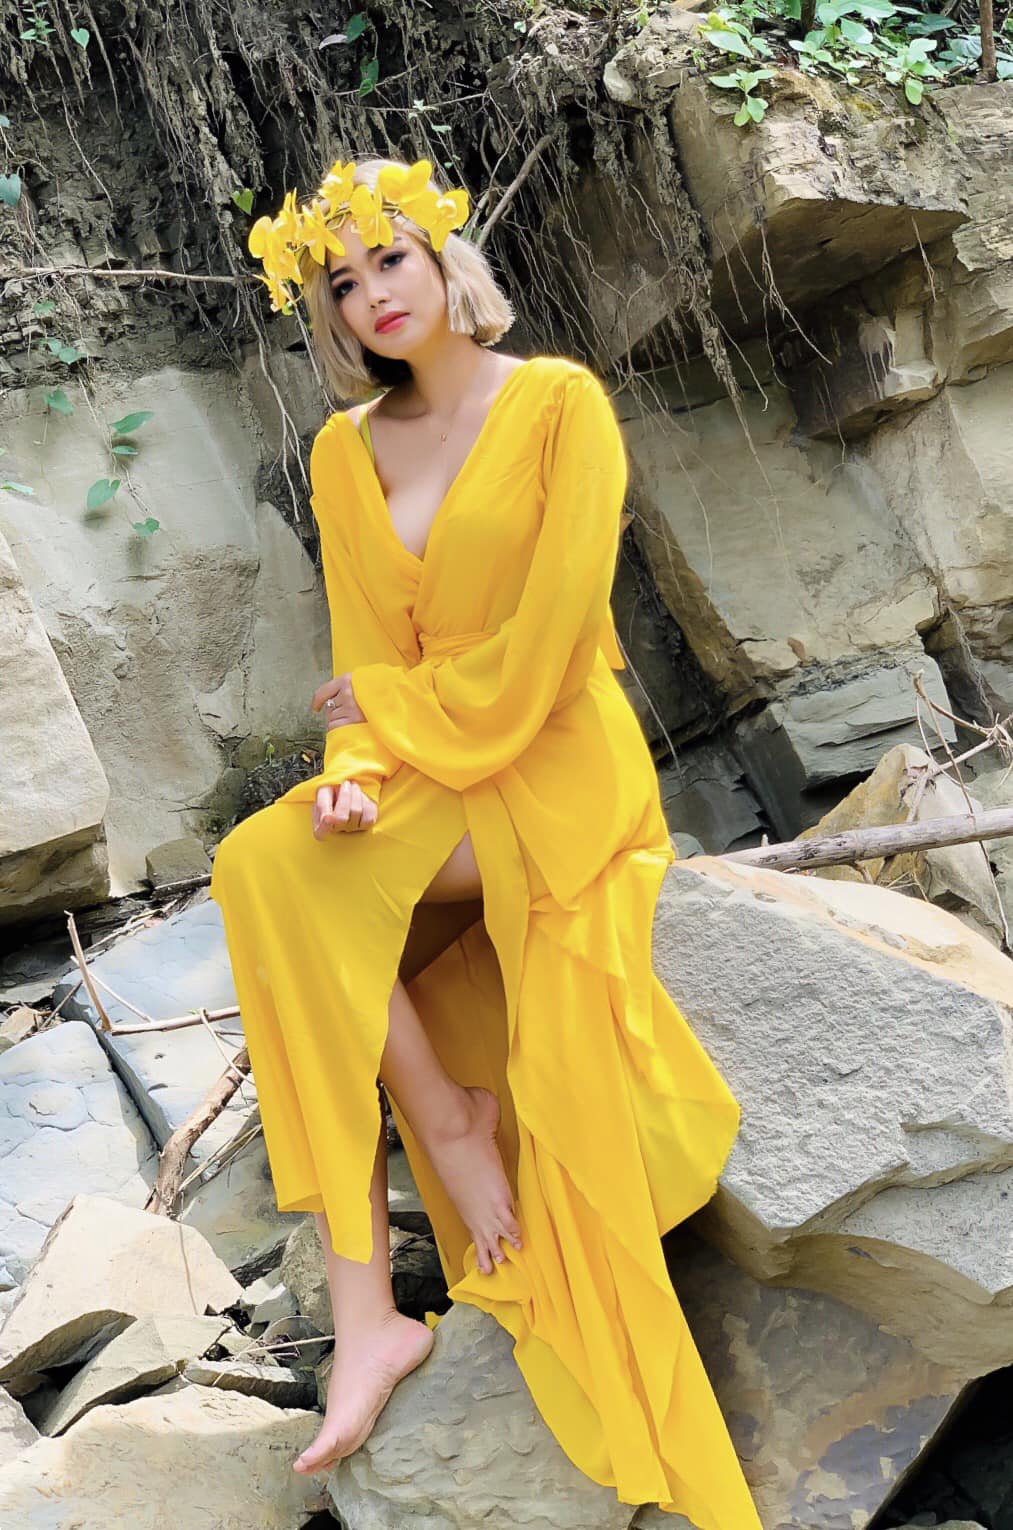 Nwe Nwe Tun - A Beautiful Girl With Yellow Dress Fashion